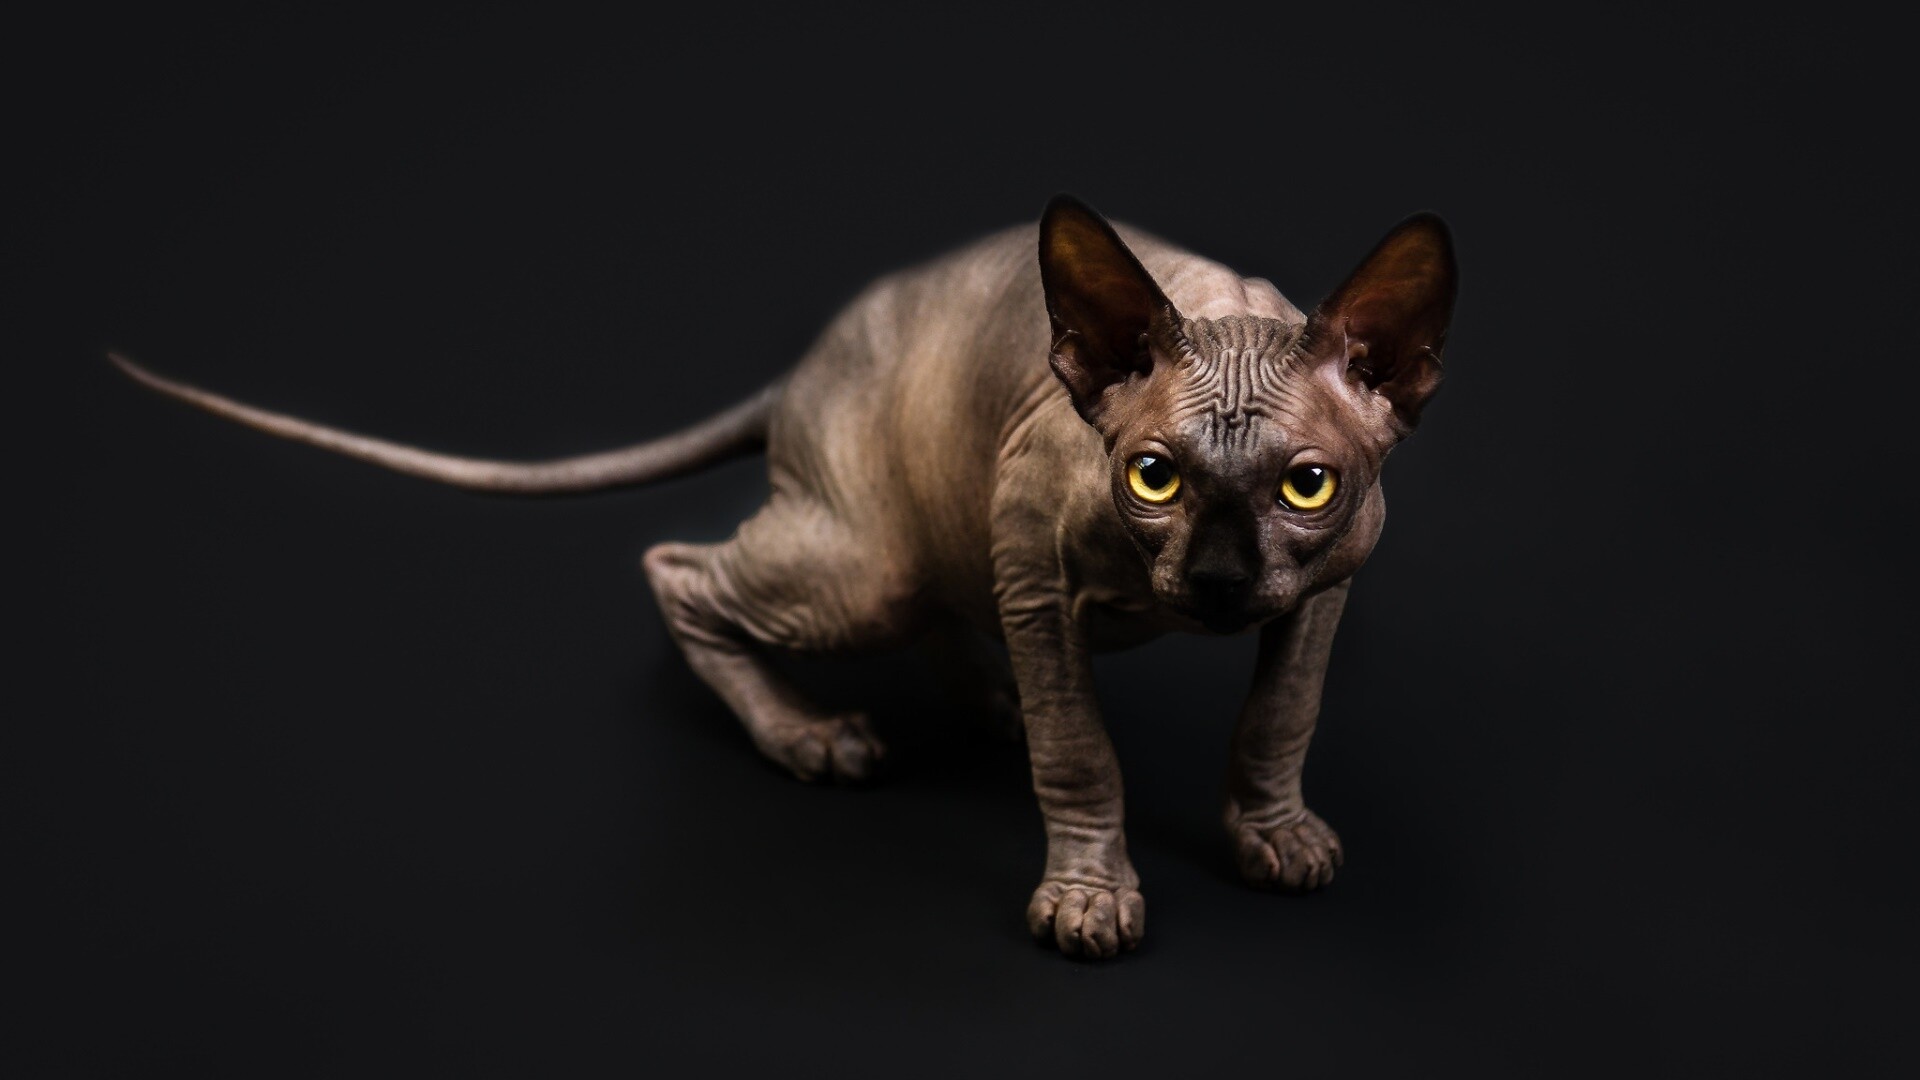 Sphynx: Originally named the Canadian hairless, Cat breed. 1920x1080 Full HD Wallpaper.